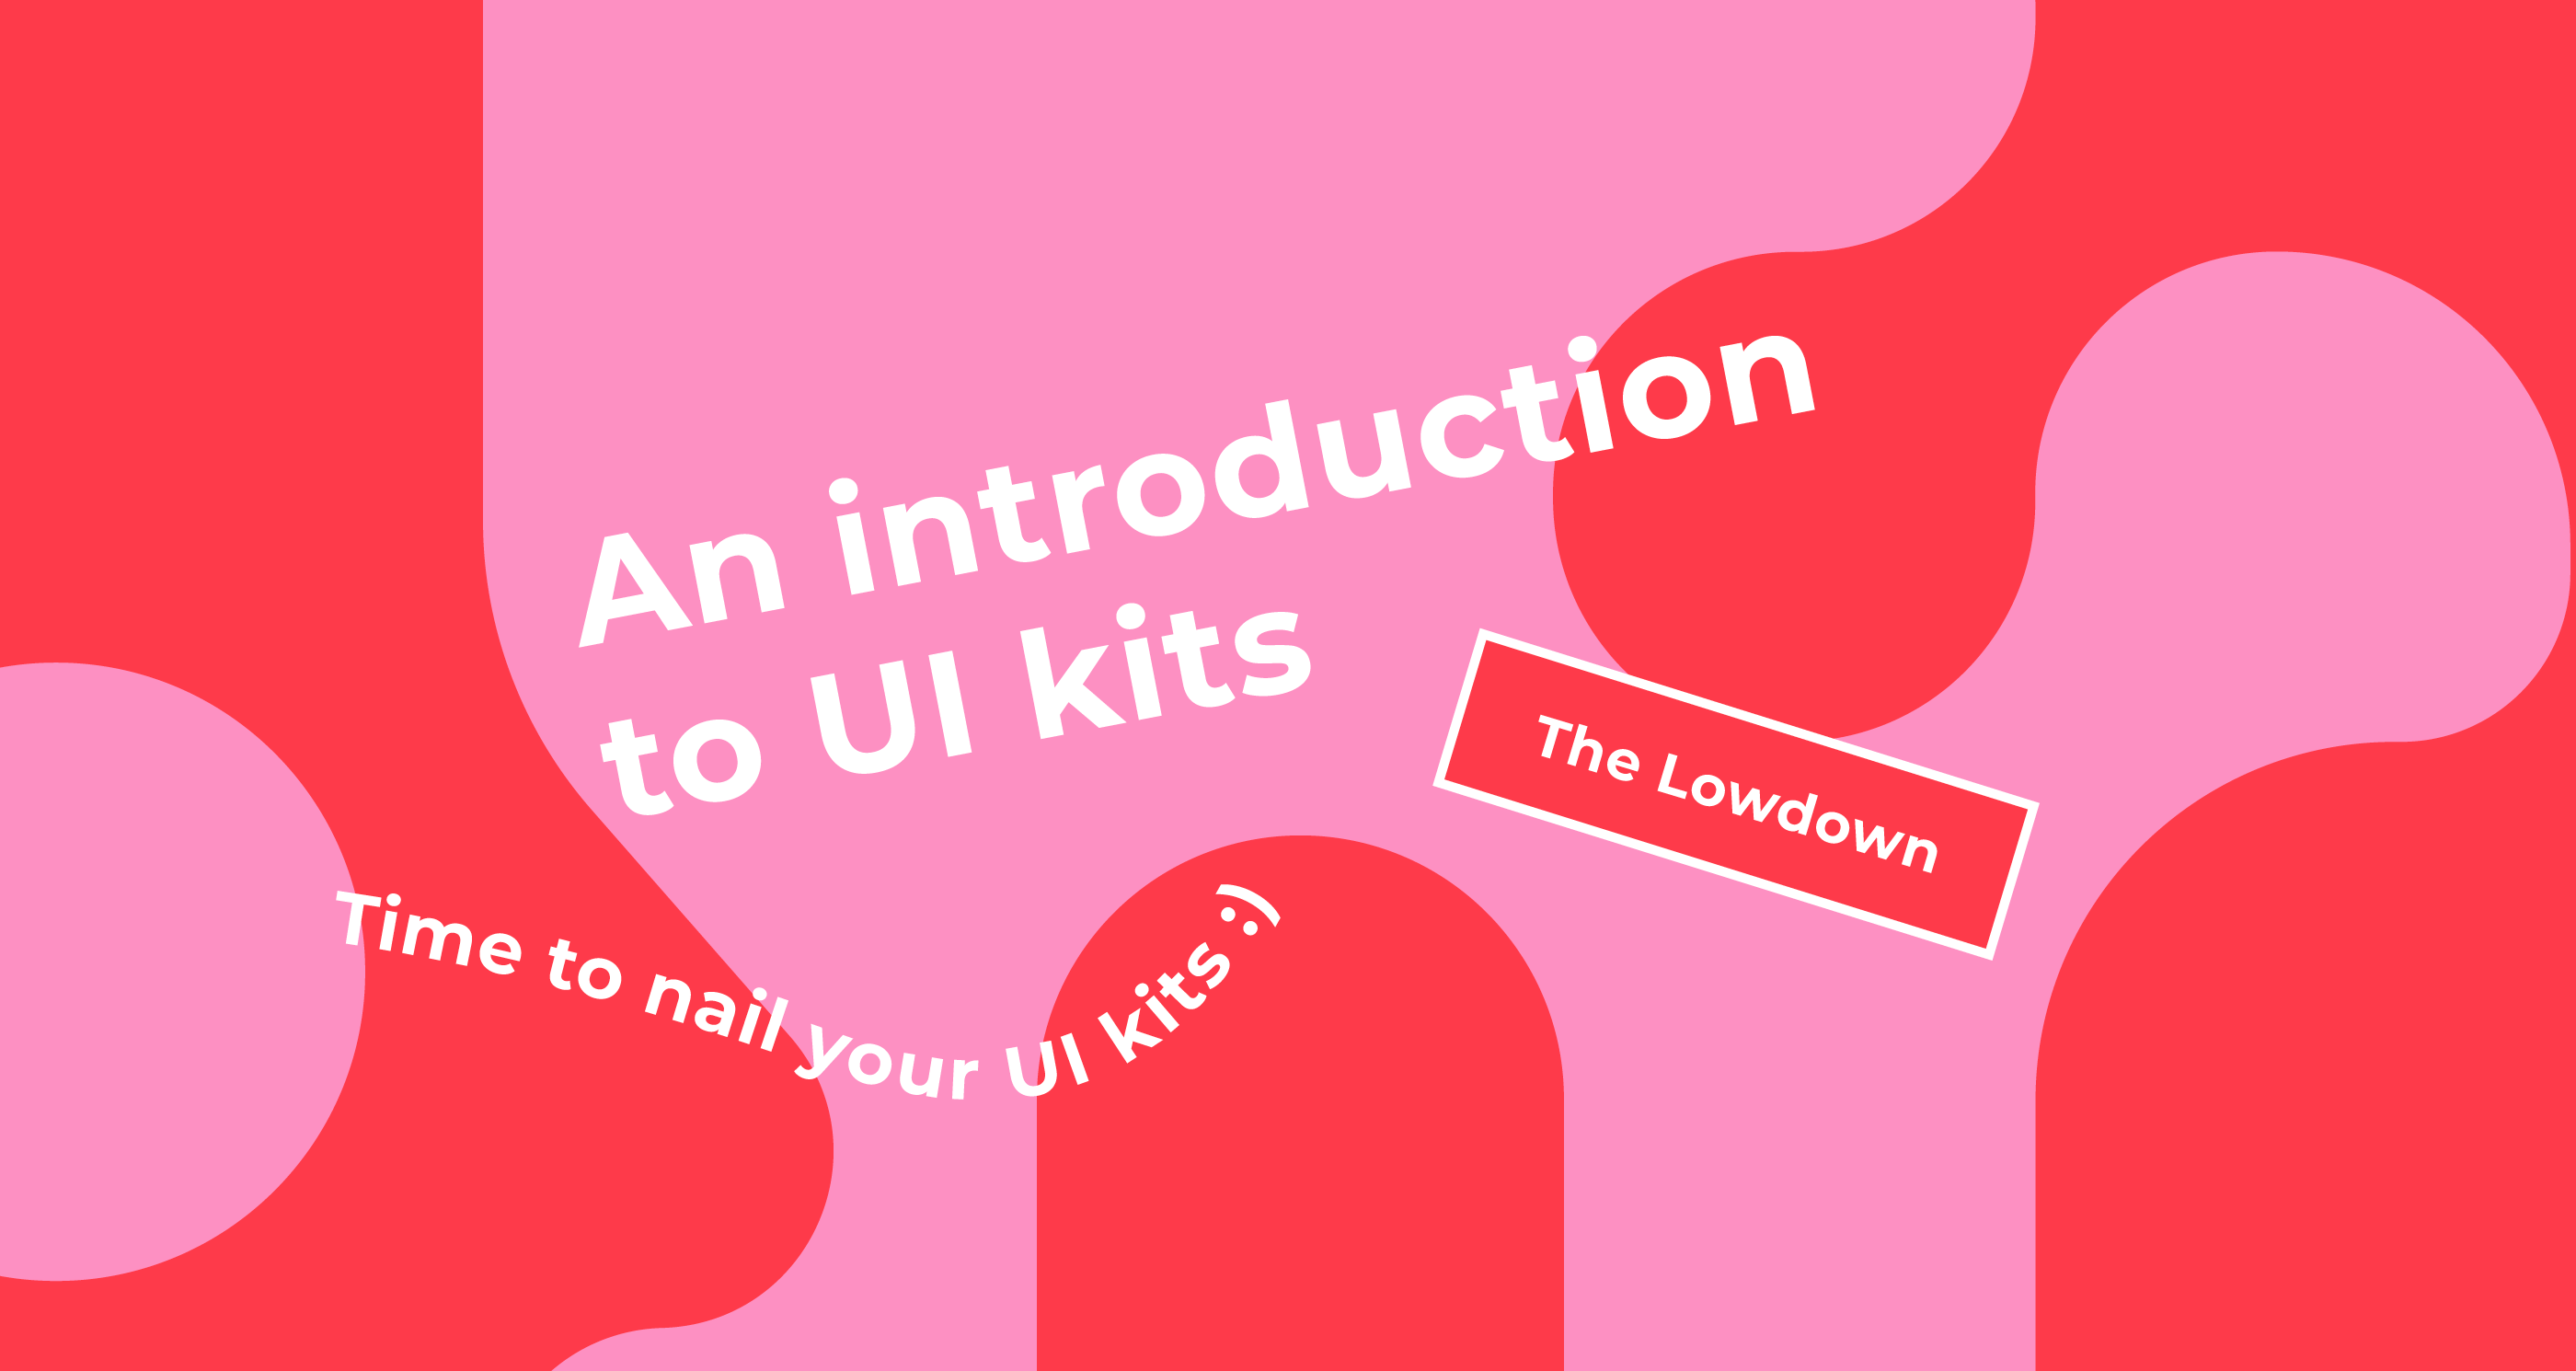 An introduction to UI kits